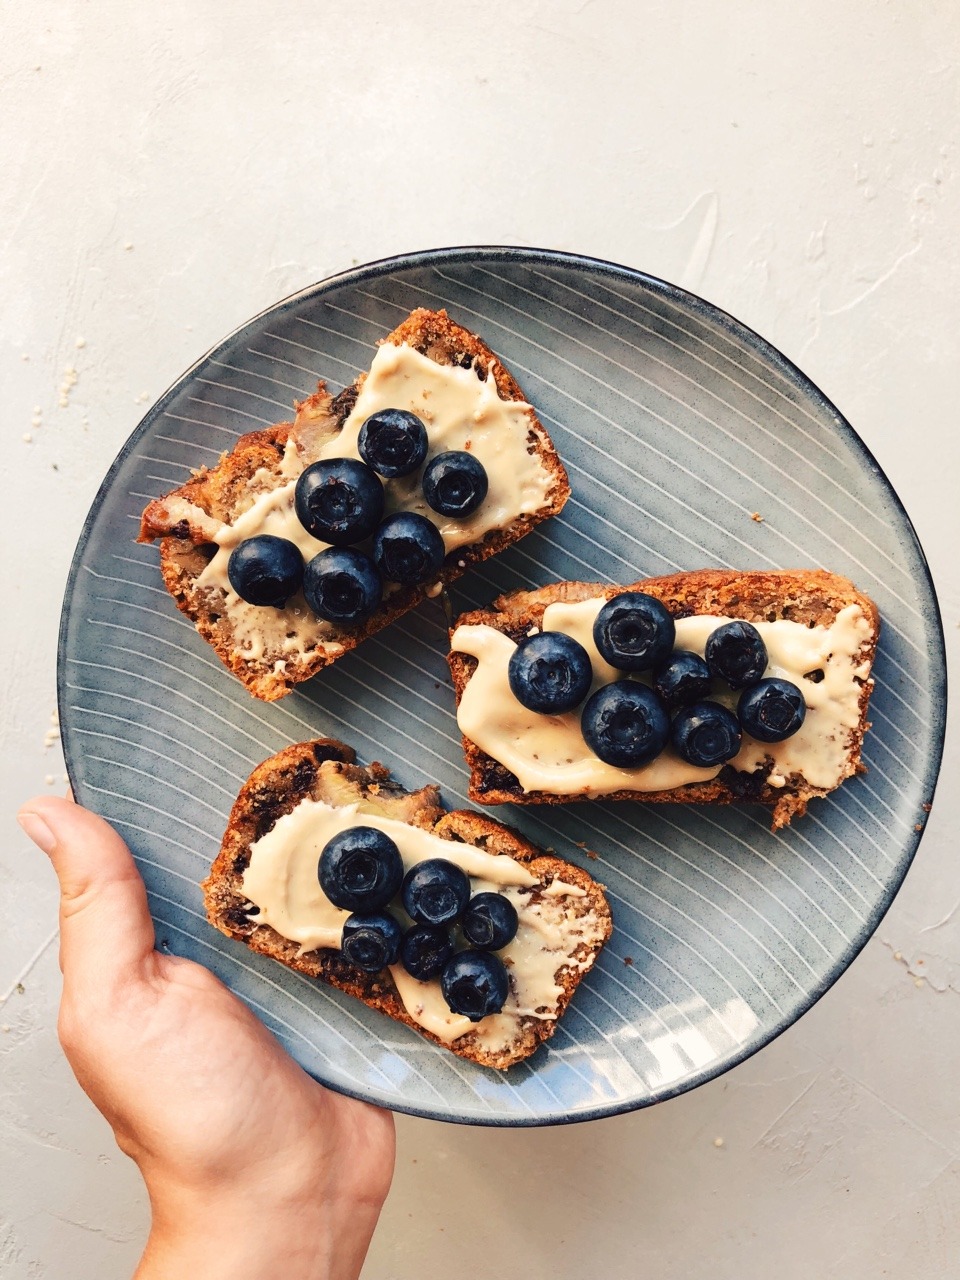 aspoonfuloflissi:
â€œBanana bread with cashew butter and blueberries ðŸ‘…
Instagram: aspoonfulofhealth_
â€